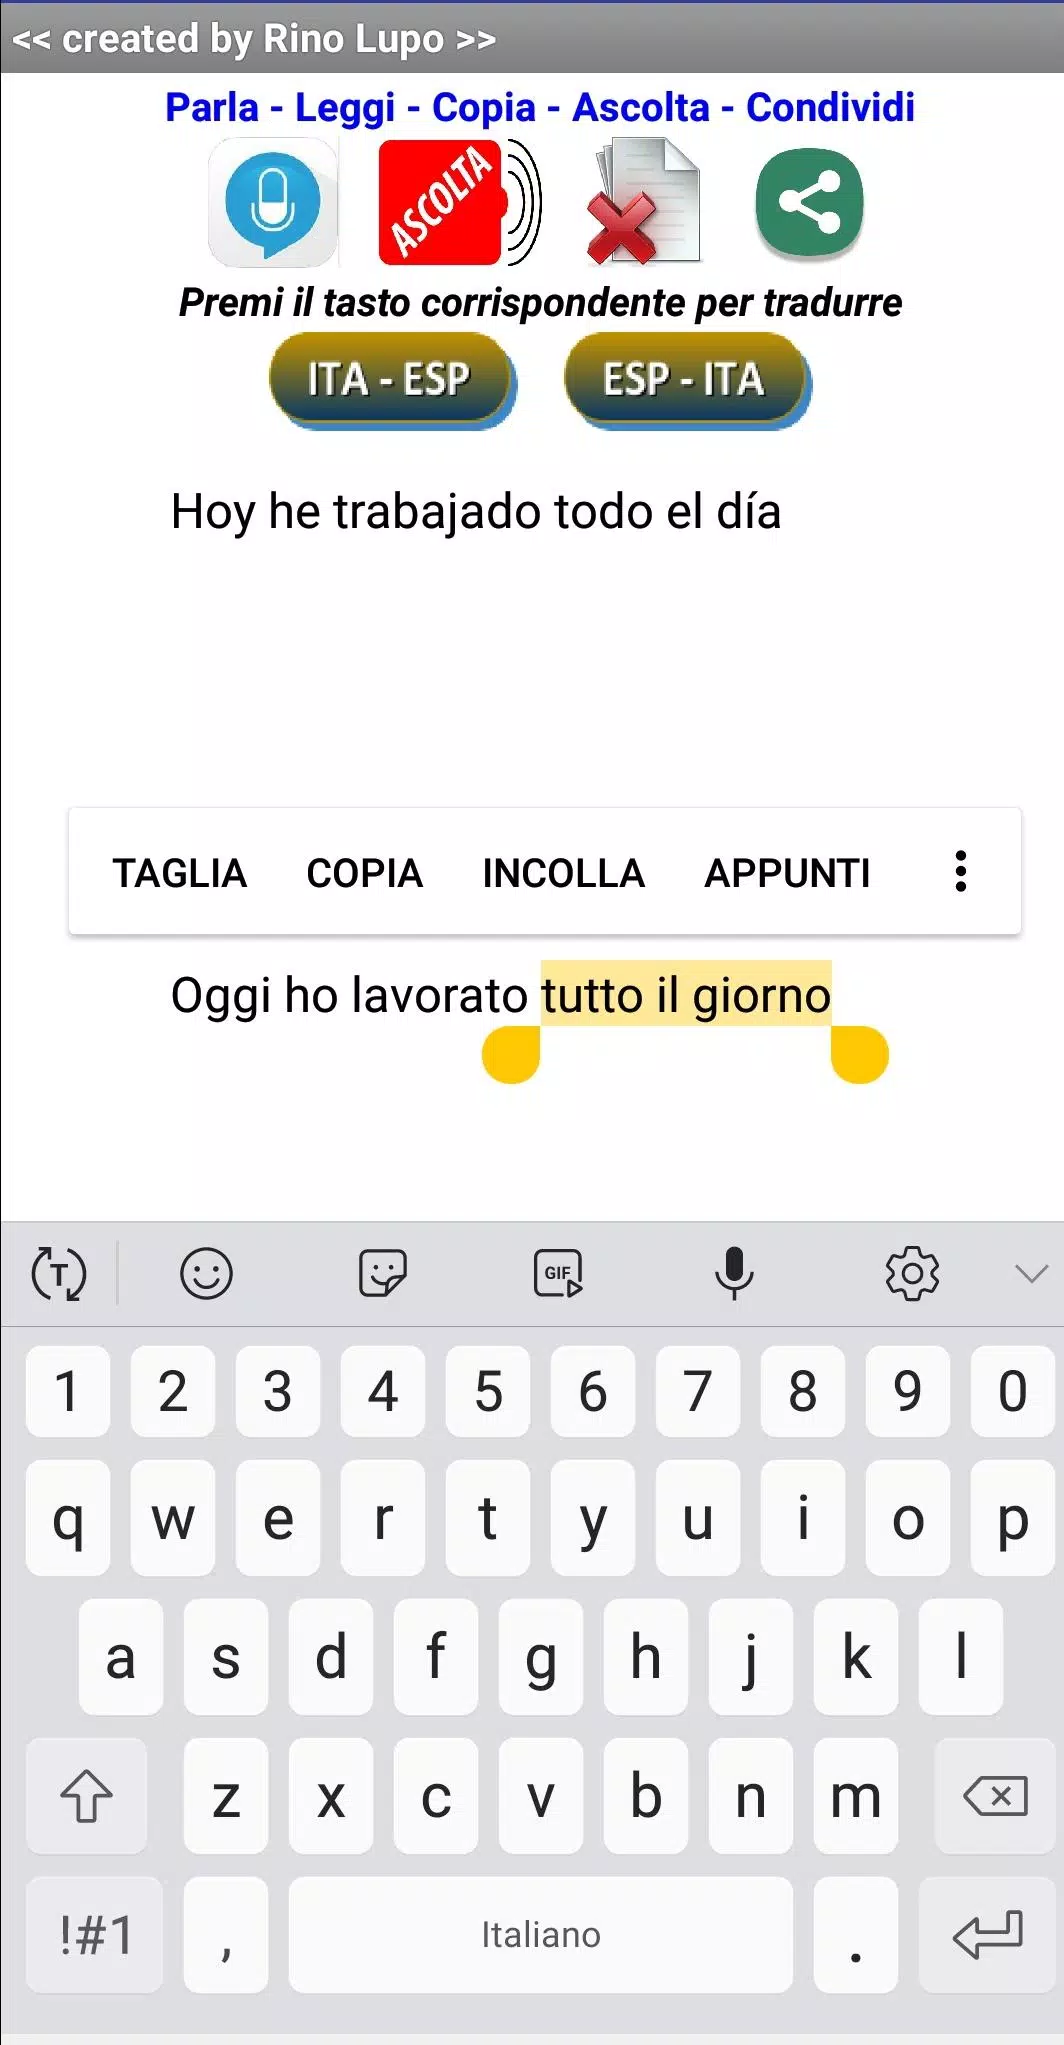 Traduttore Italiano - Spagnolo for Android - APK Download